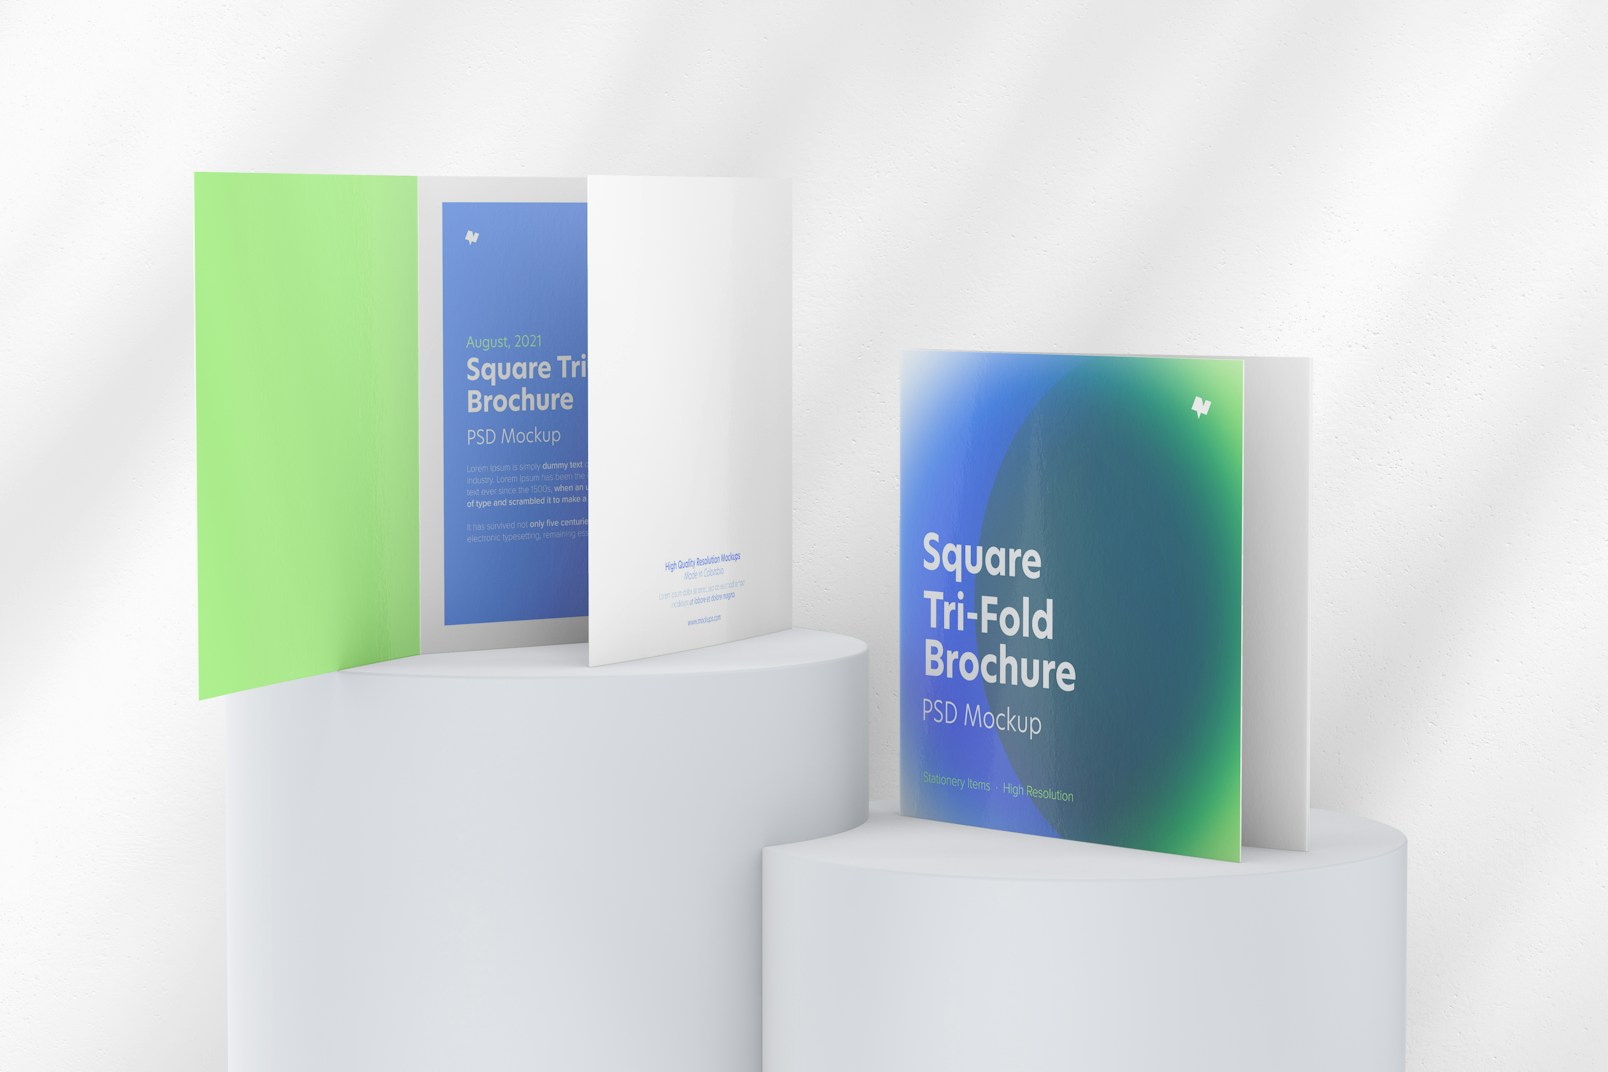 Square Tri-Fold Brochures Mockup, on Podiums